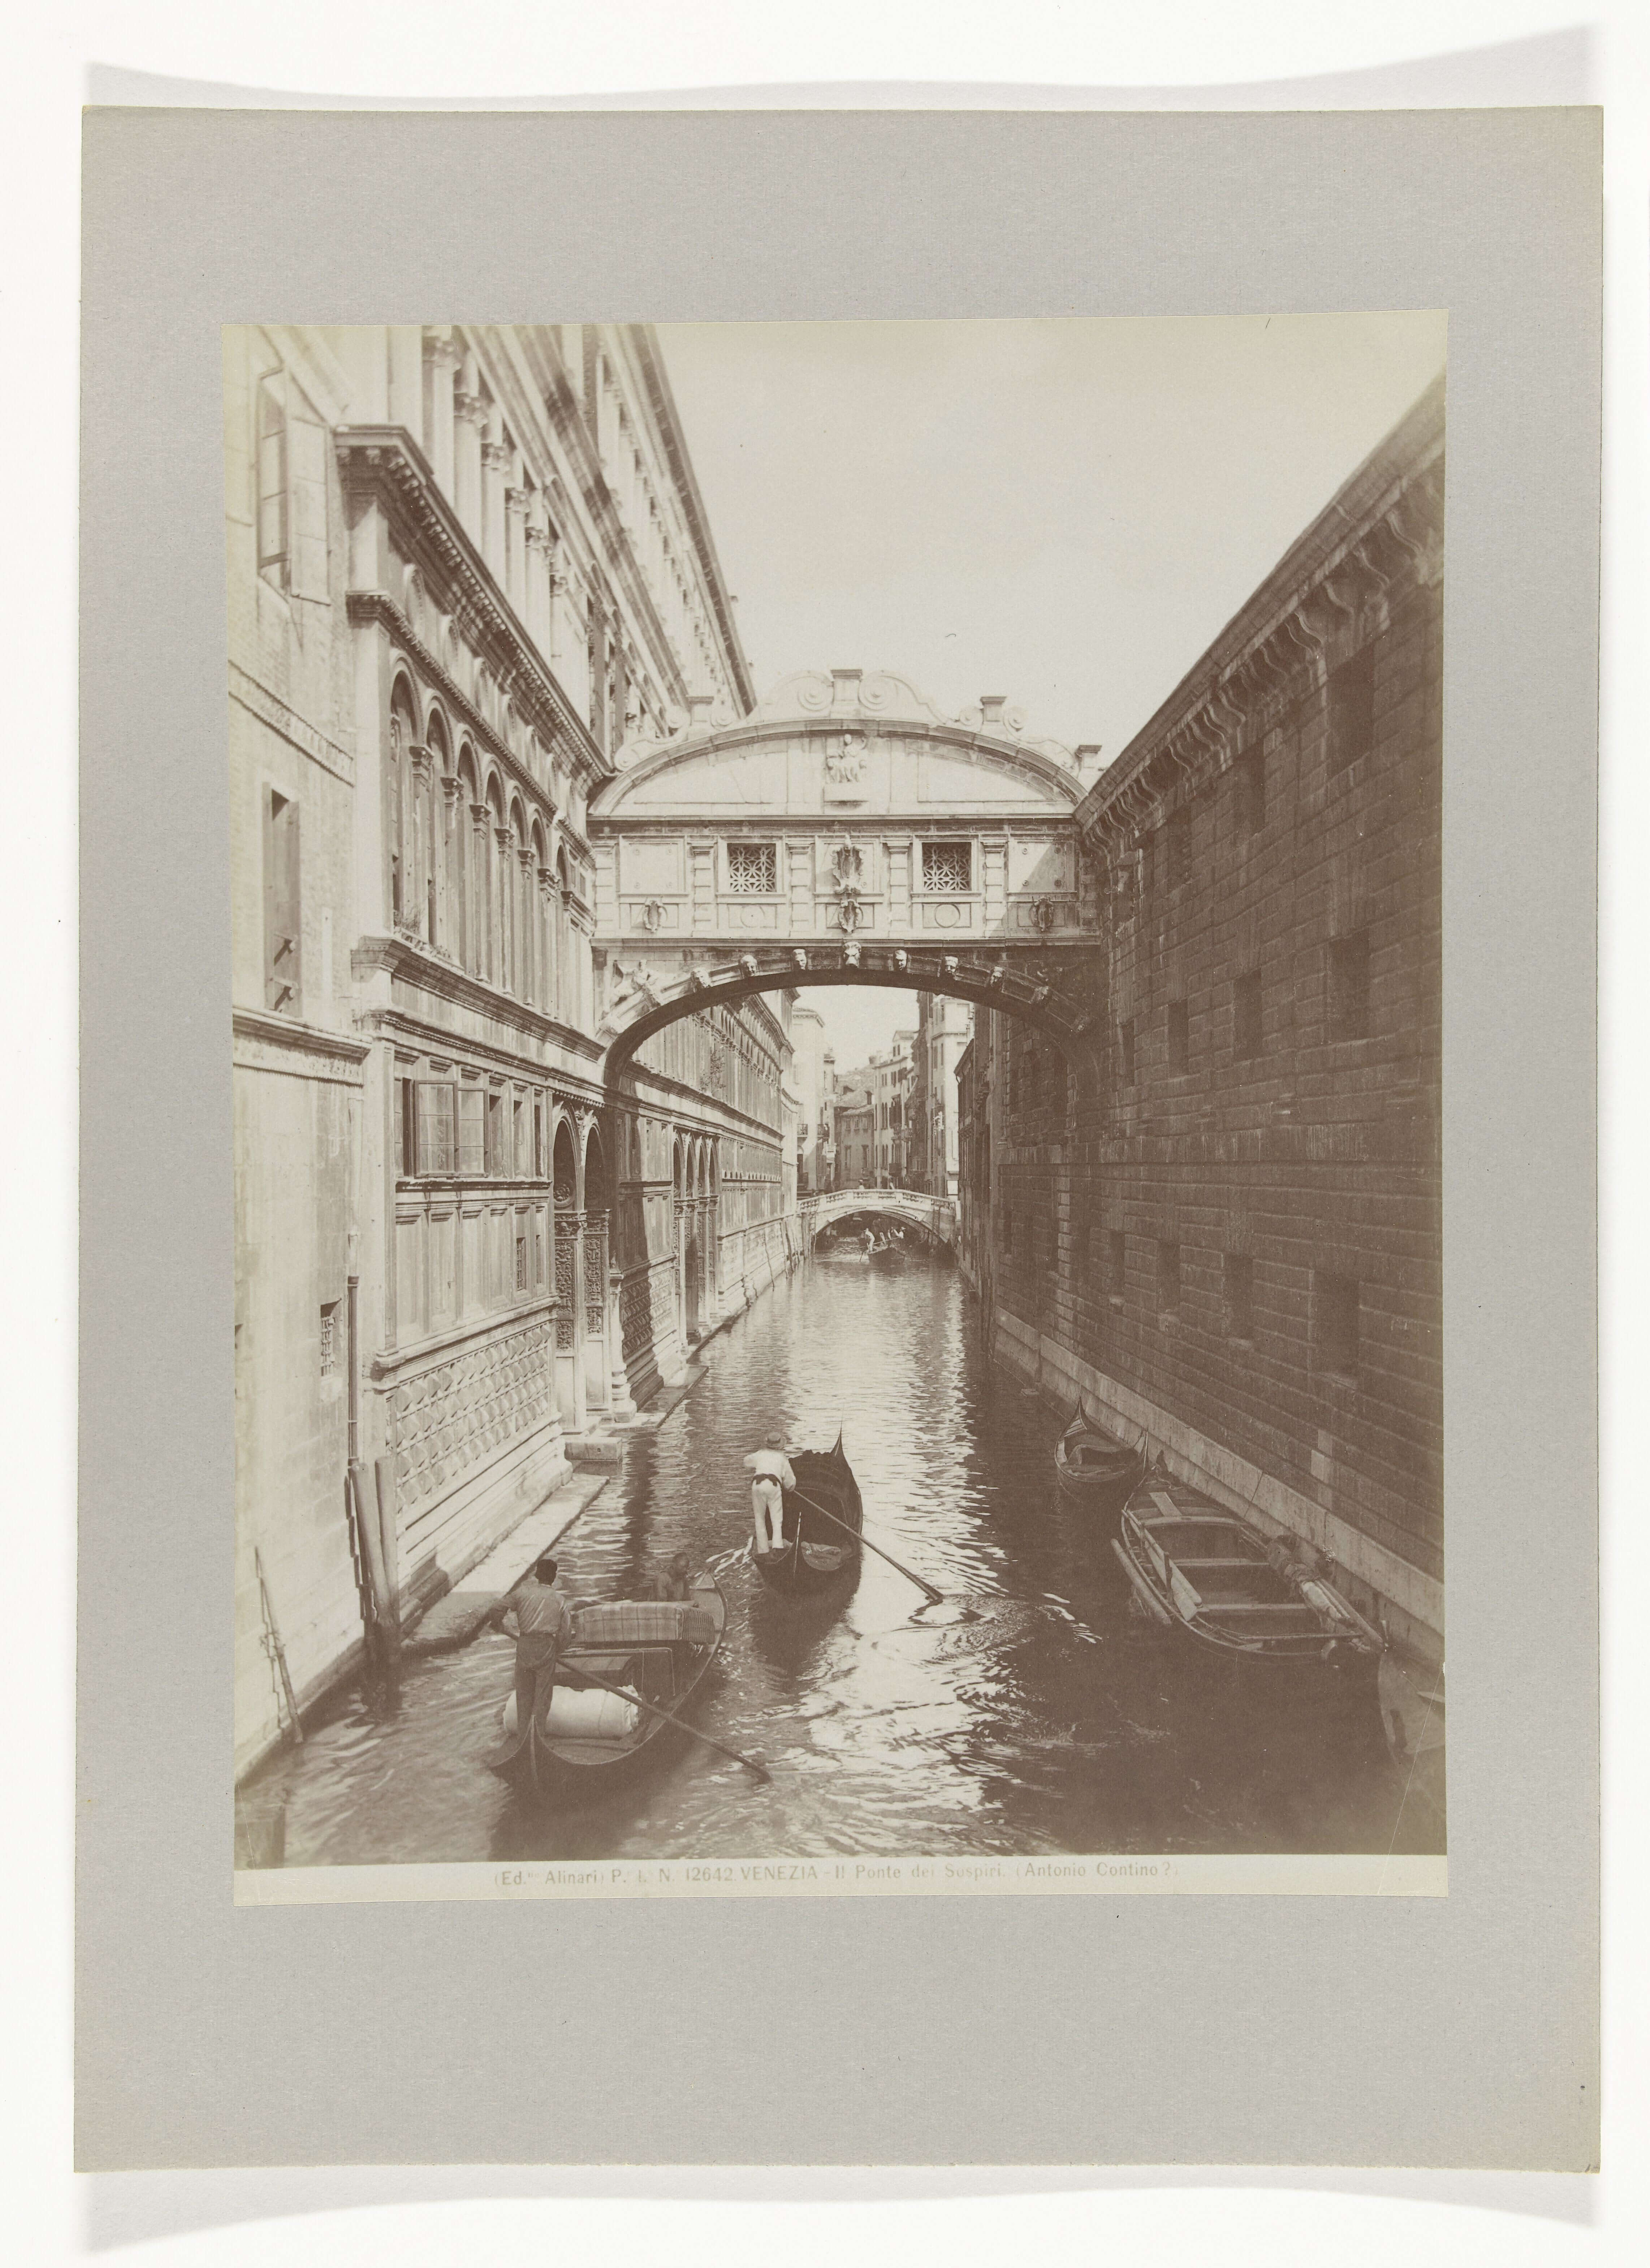 Bridge of Sighs, Venice. Source: Fratelli Alinari, ca. 1880 - ca. 1895, Rijksmuseum Amsterdam. 